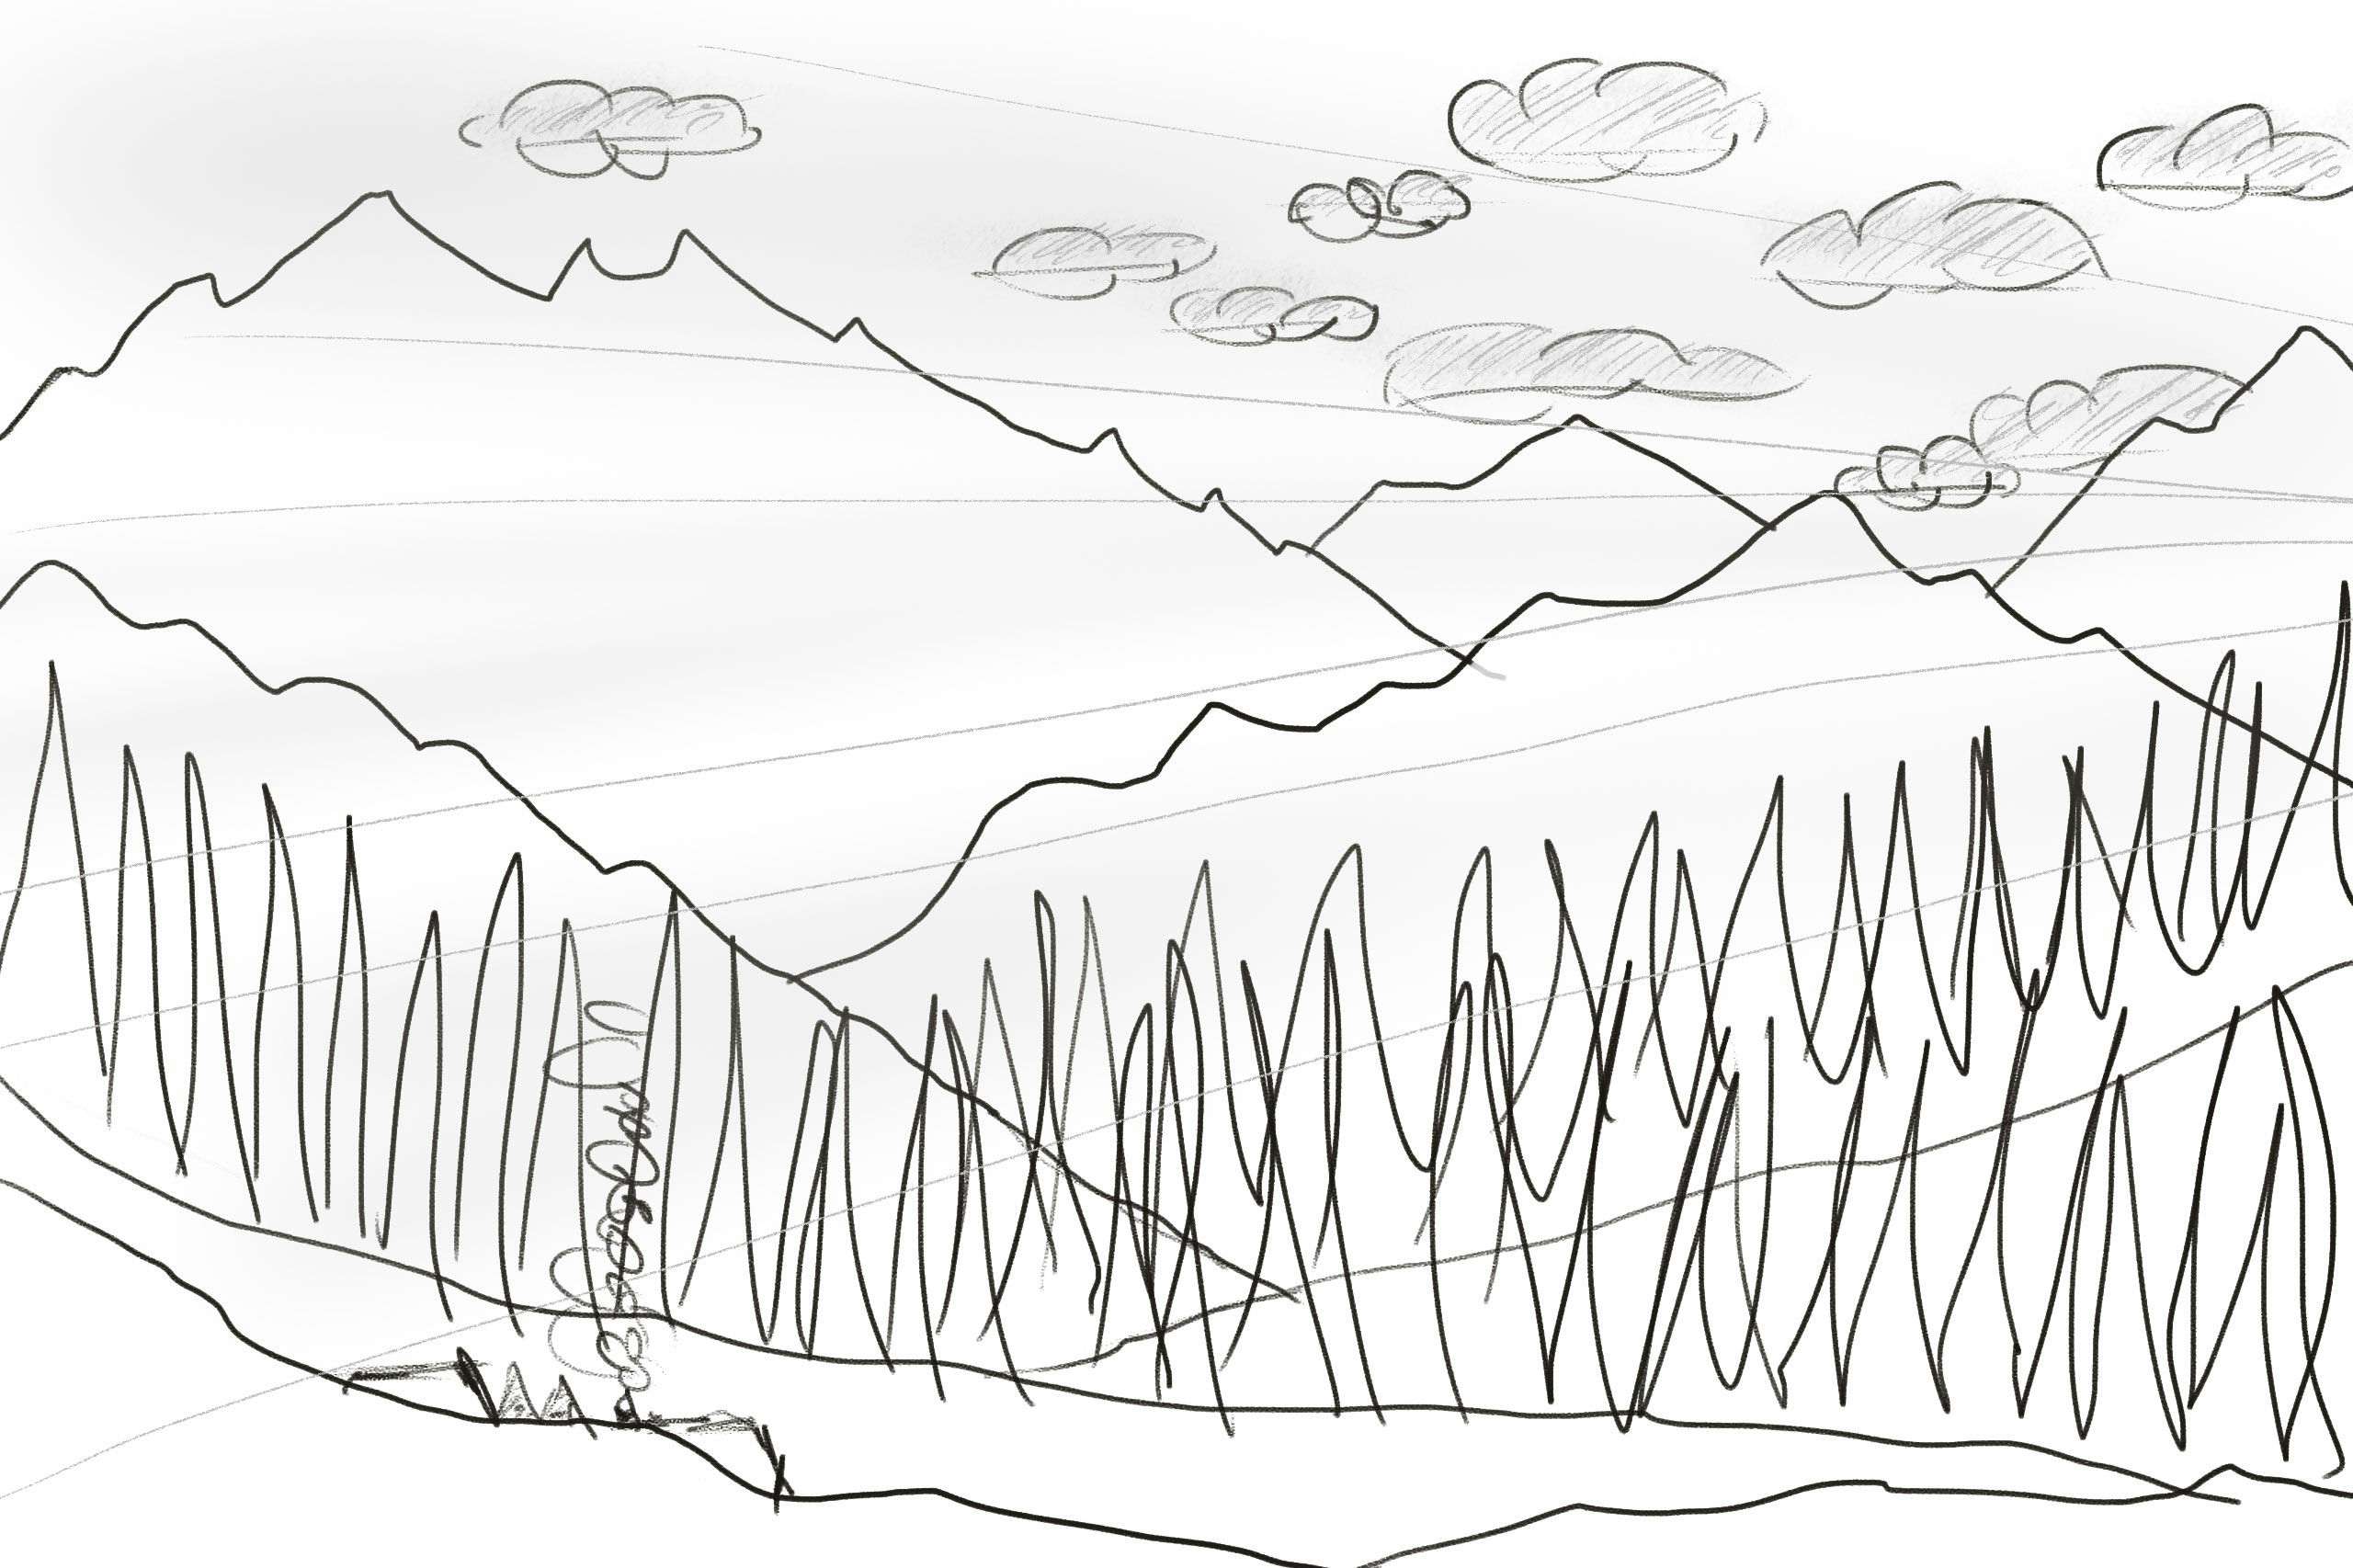 Raw sketch of an alpine landscape scene by Xavier Wendling